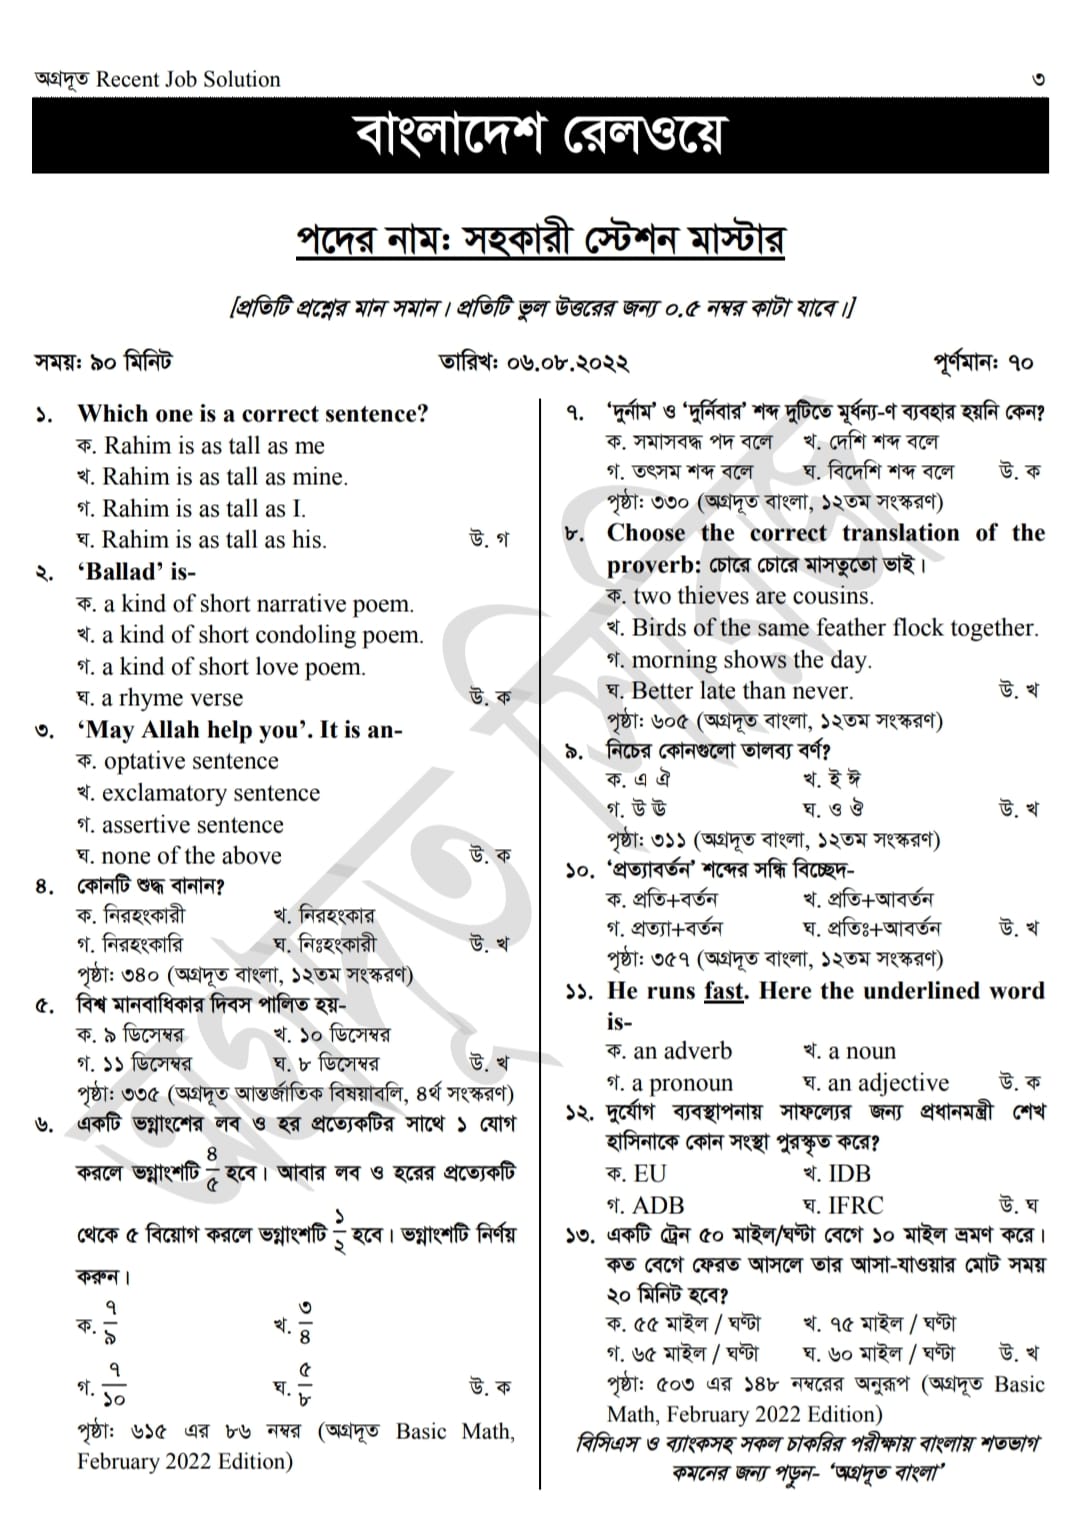 Bangladesh Railway Exam Question Solution